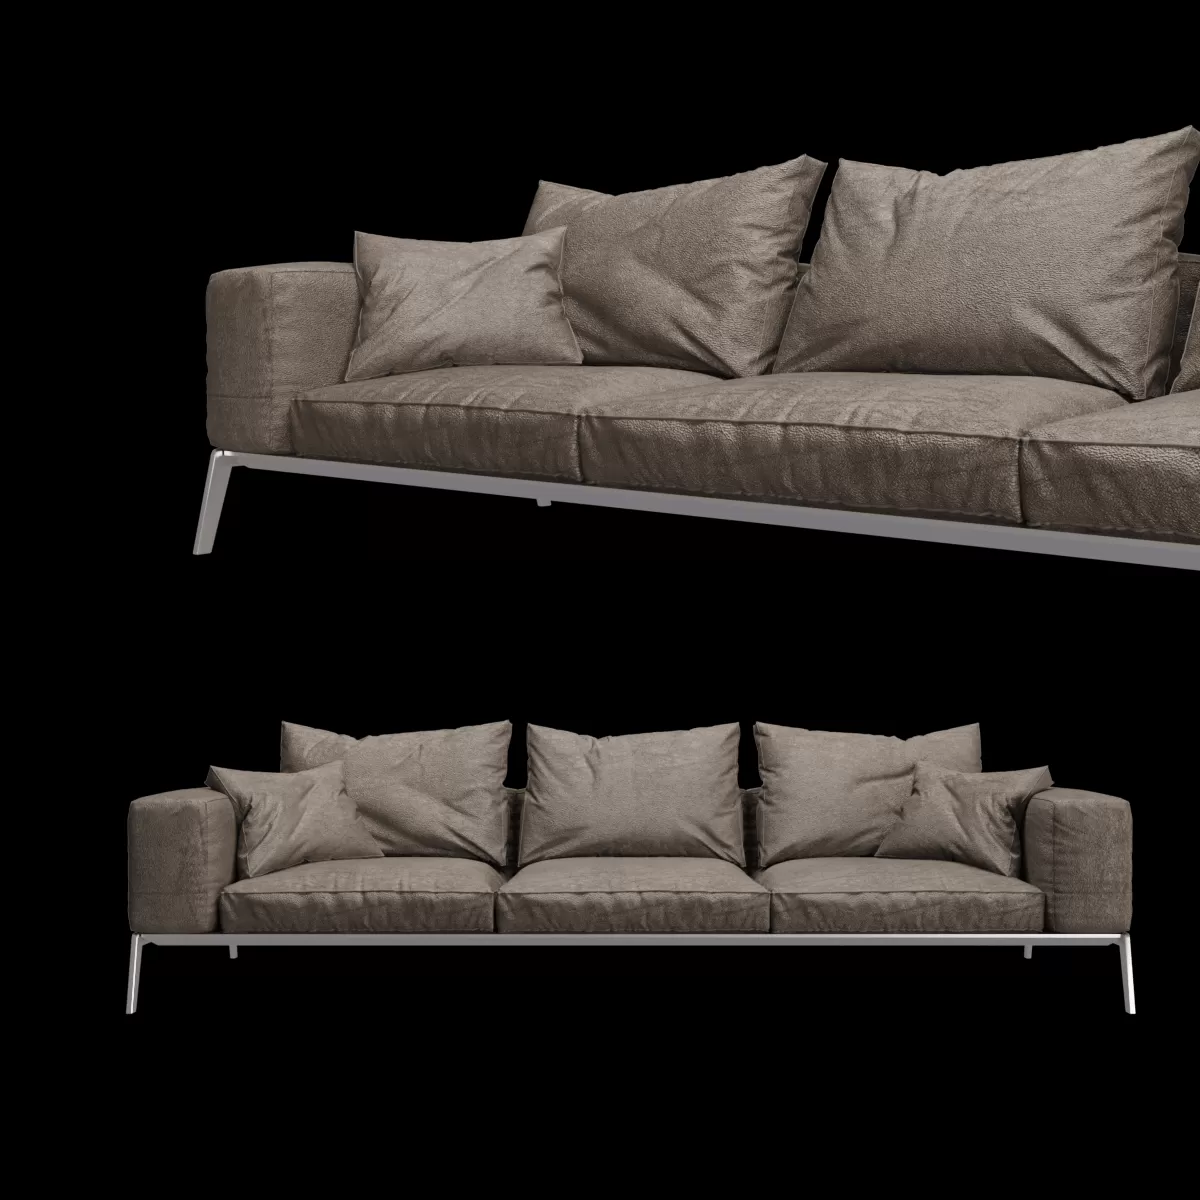 SOFA – Flexform Lifesteel sofa